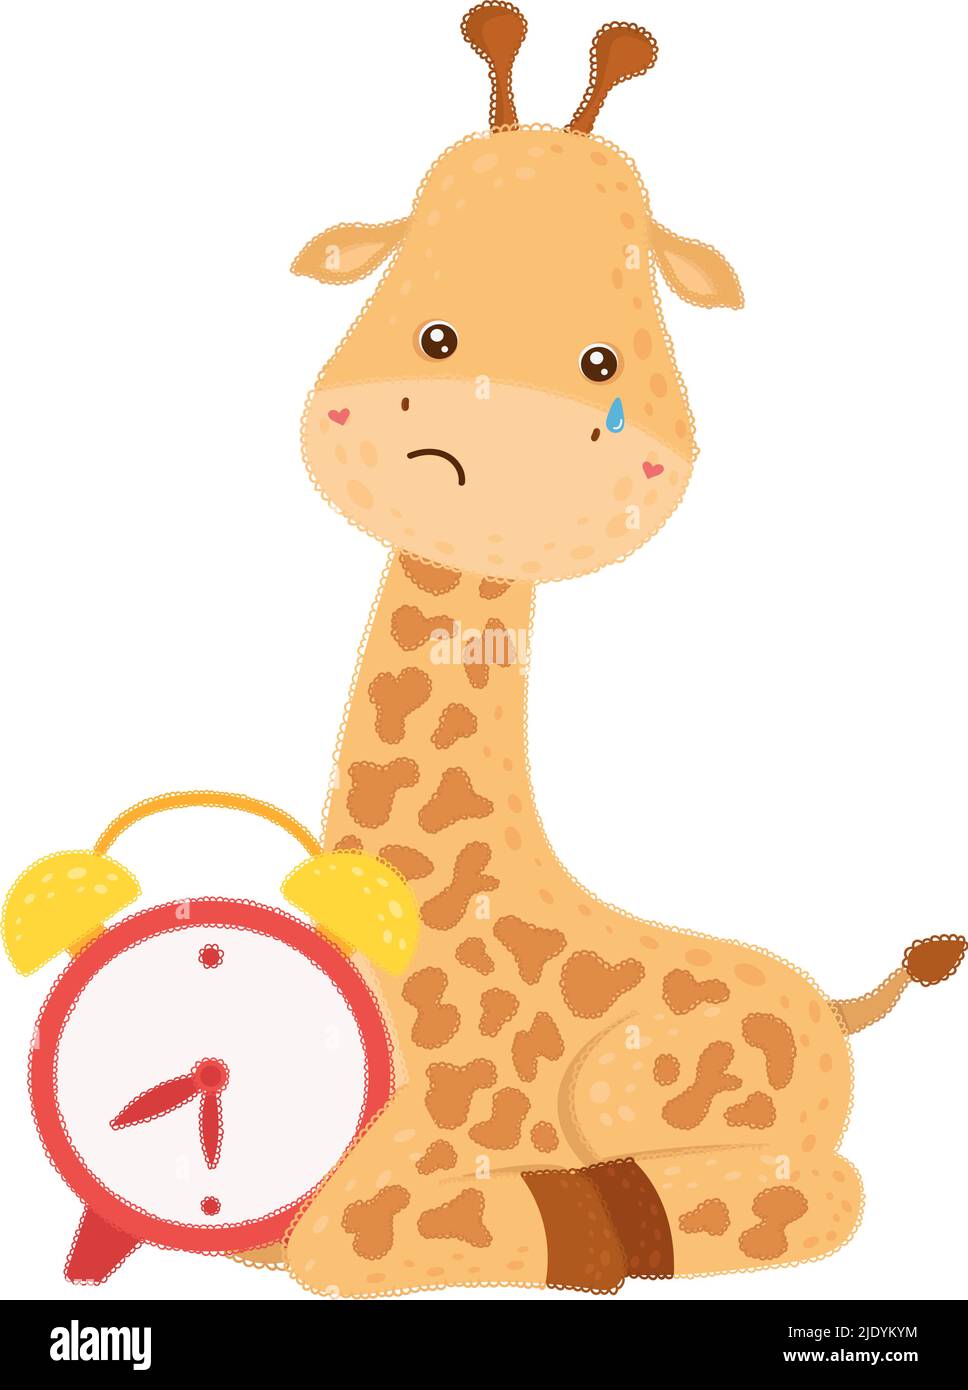 Cute Clipart Giraffe Illustration in Cartoon Style. Cartoon Clip Art Sad Giraffe with an Alarm Clock. Vector Illustration of an School Animal for Stock Vector